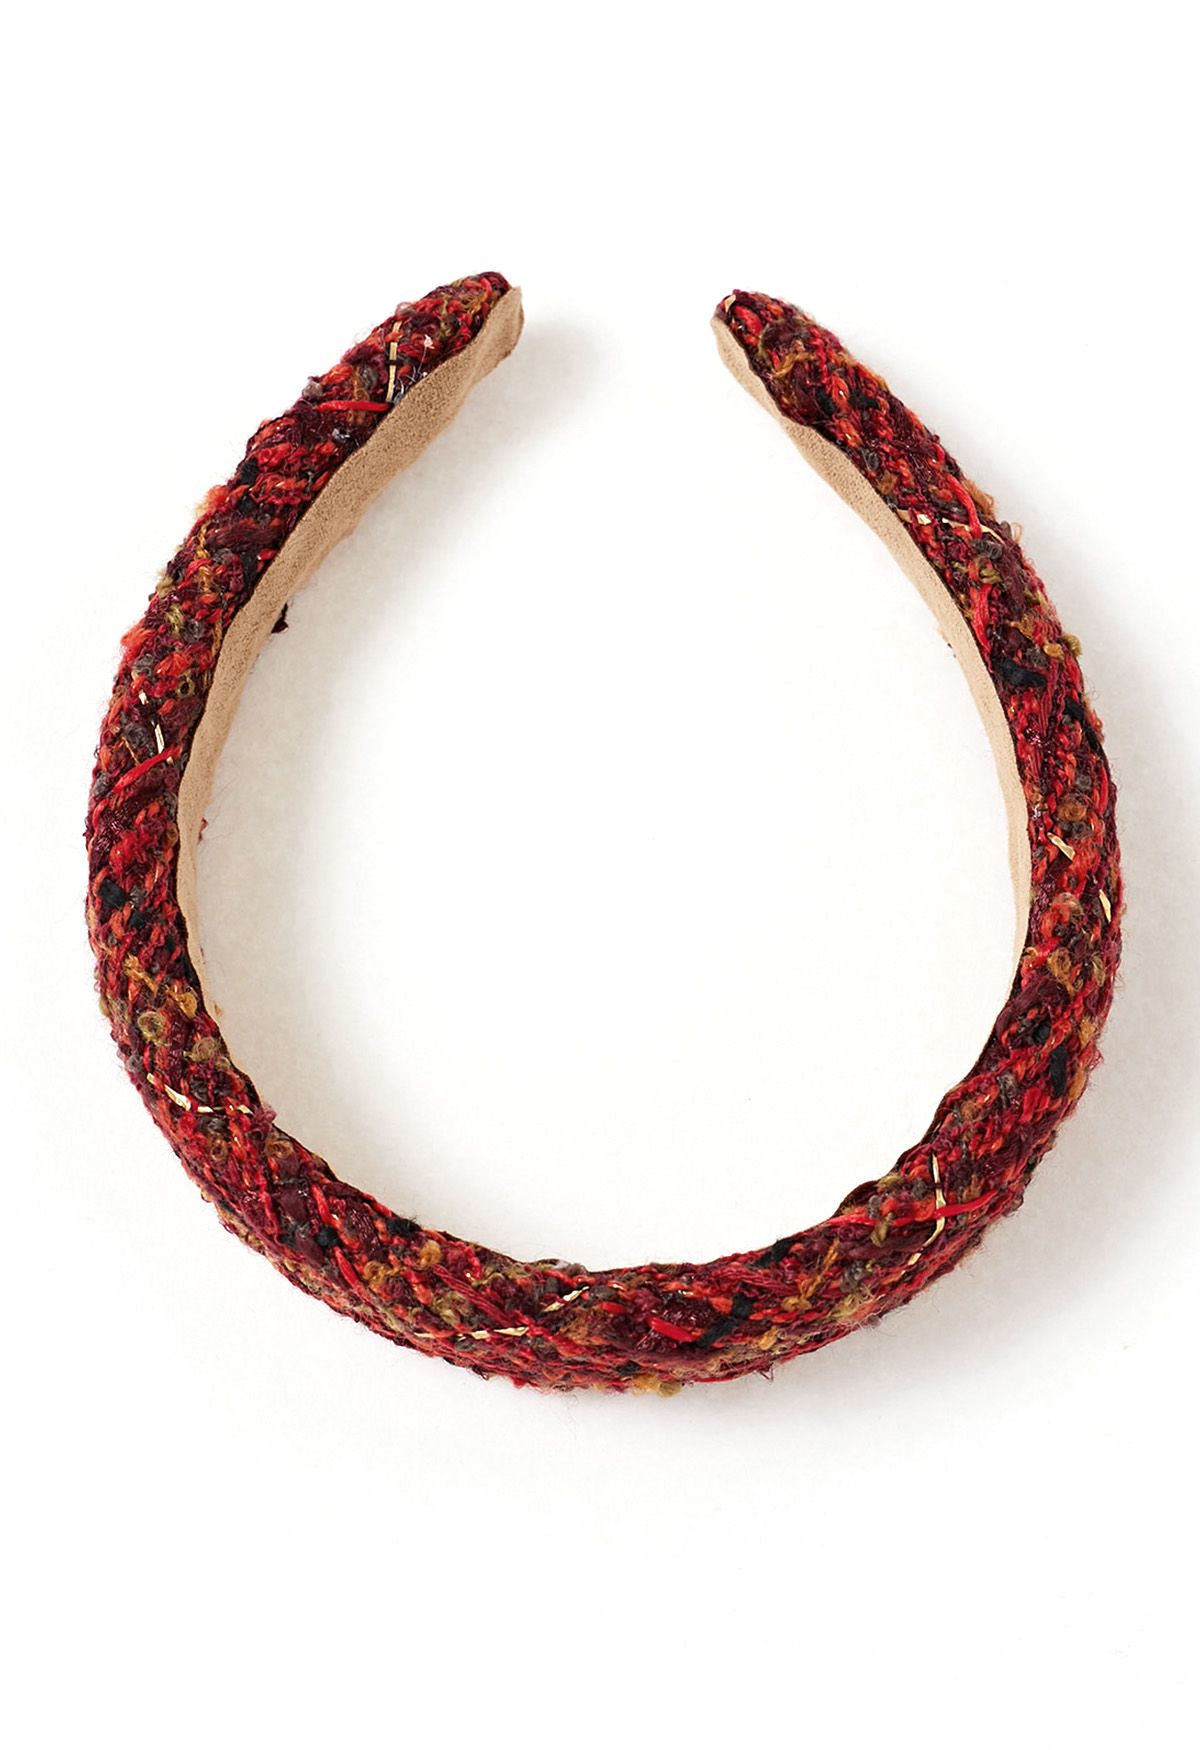 Rotes Tweed-Stirnband mit breitem Rand